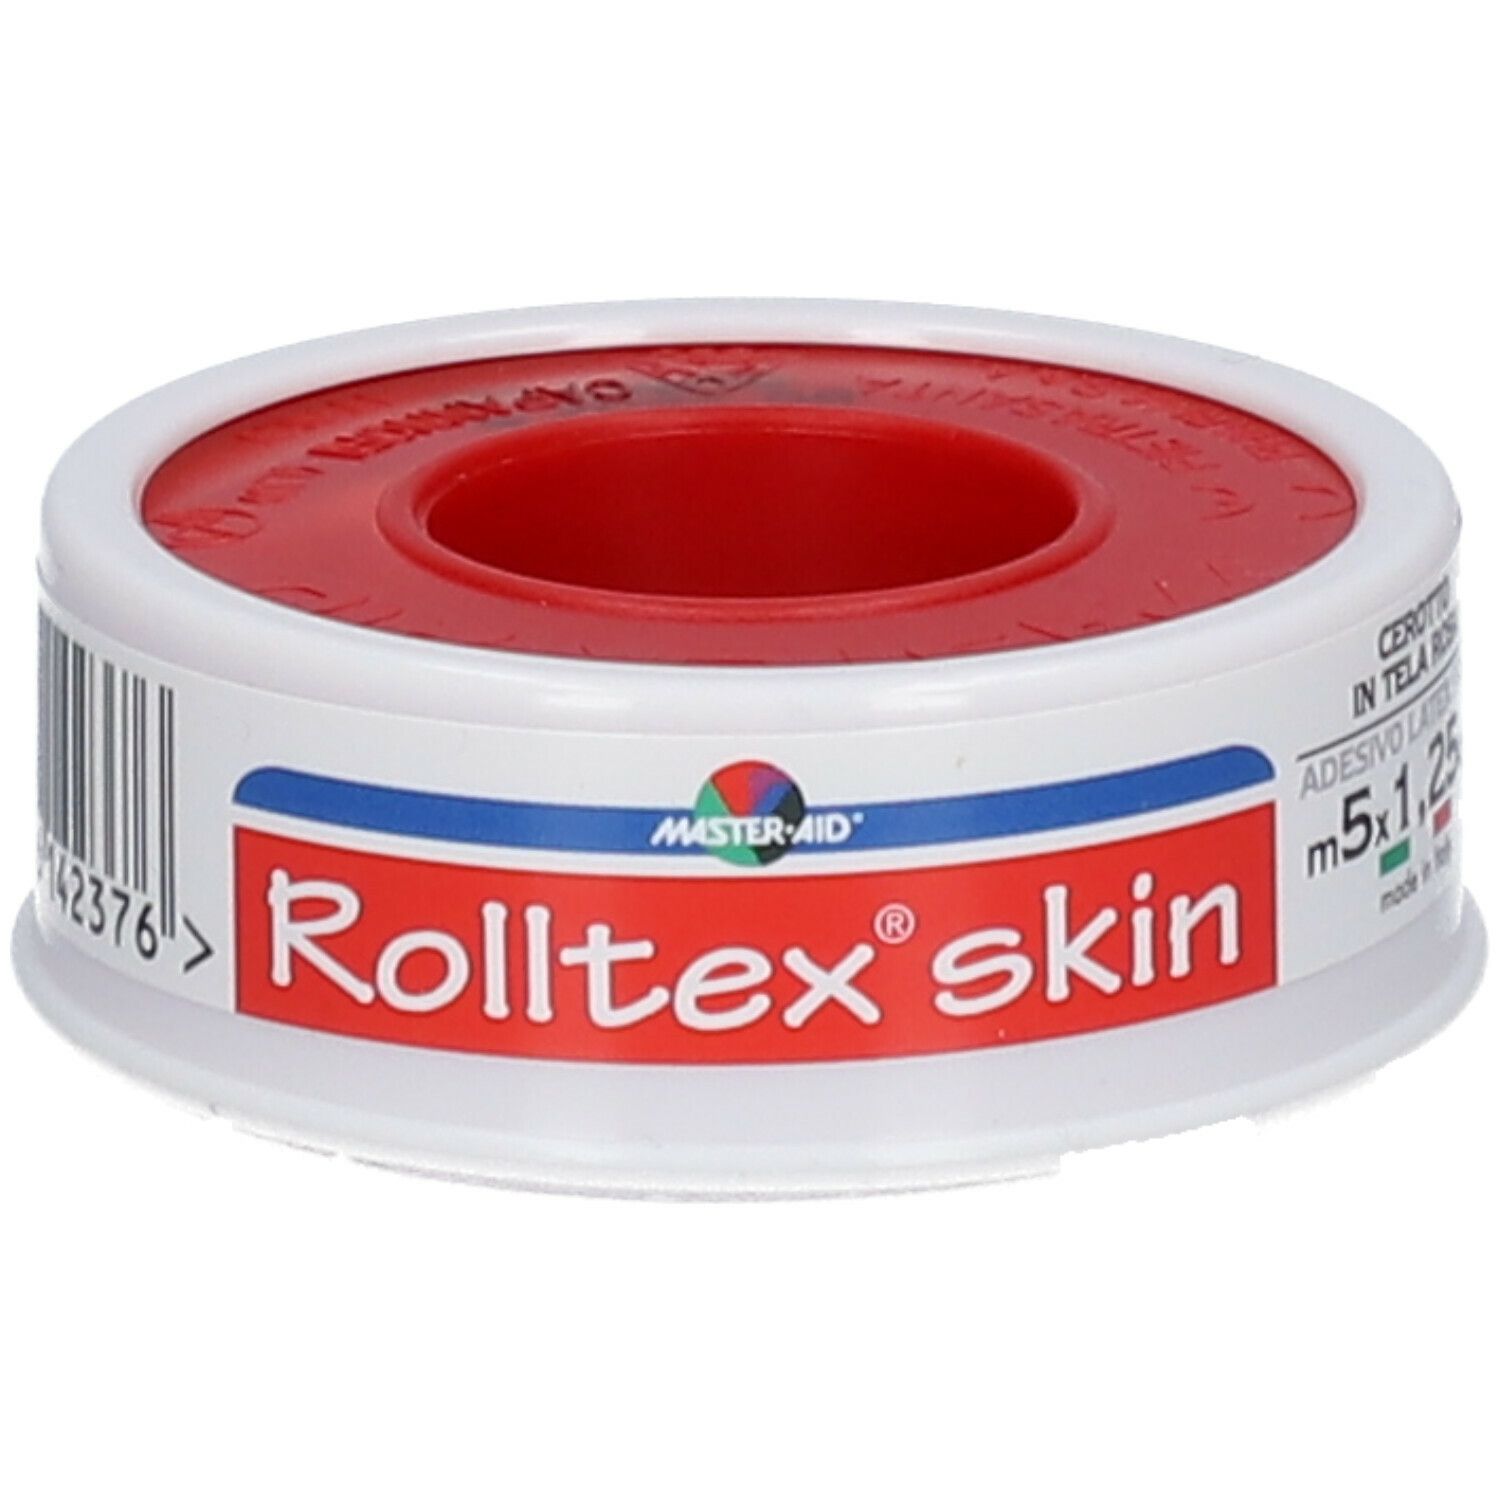 Image of Master Aid ® Rolltex® Skin 5 m x 1,25 cm